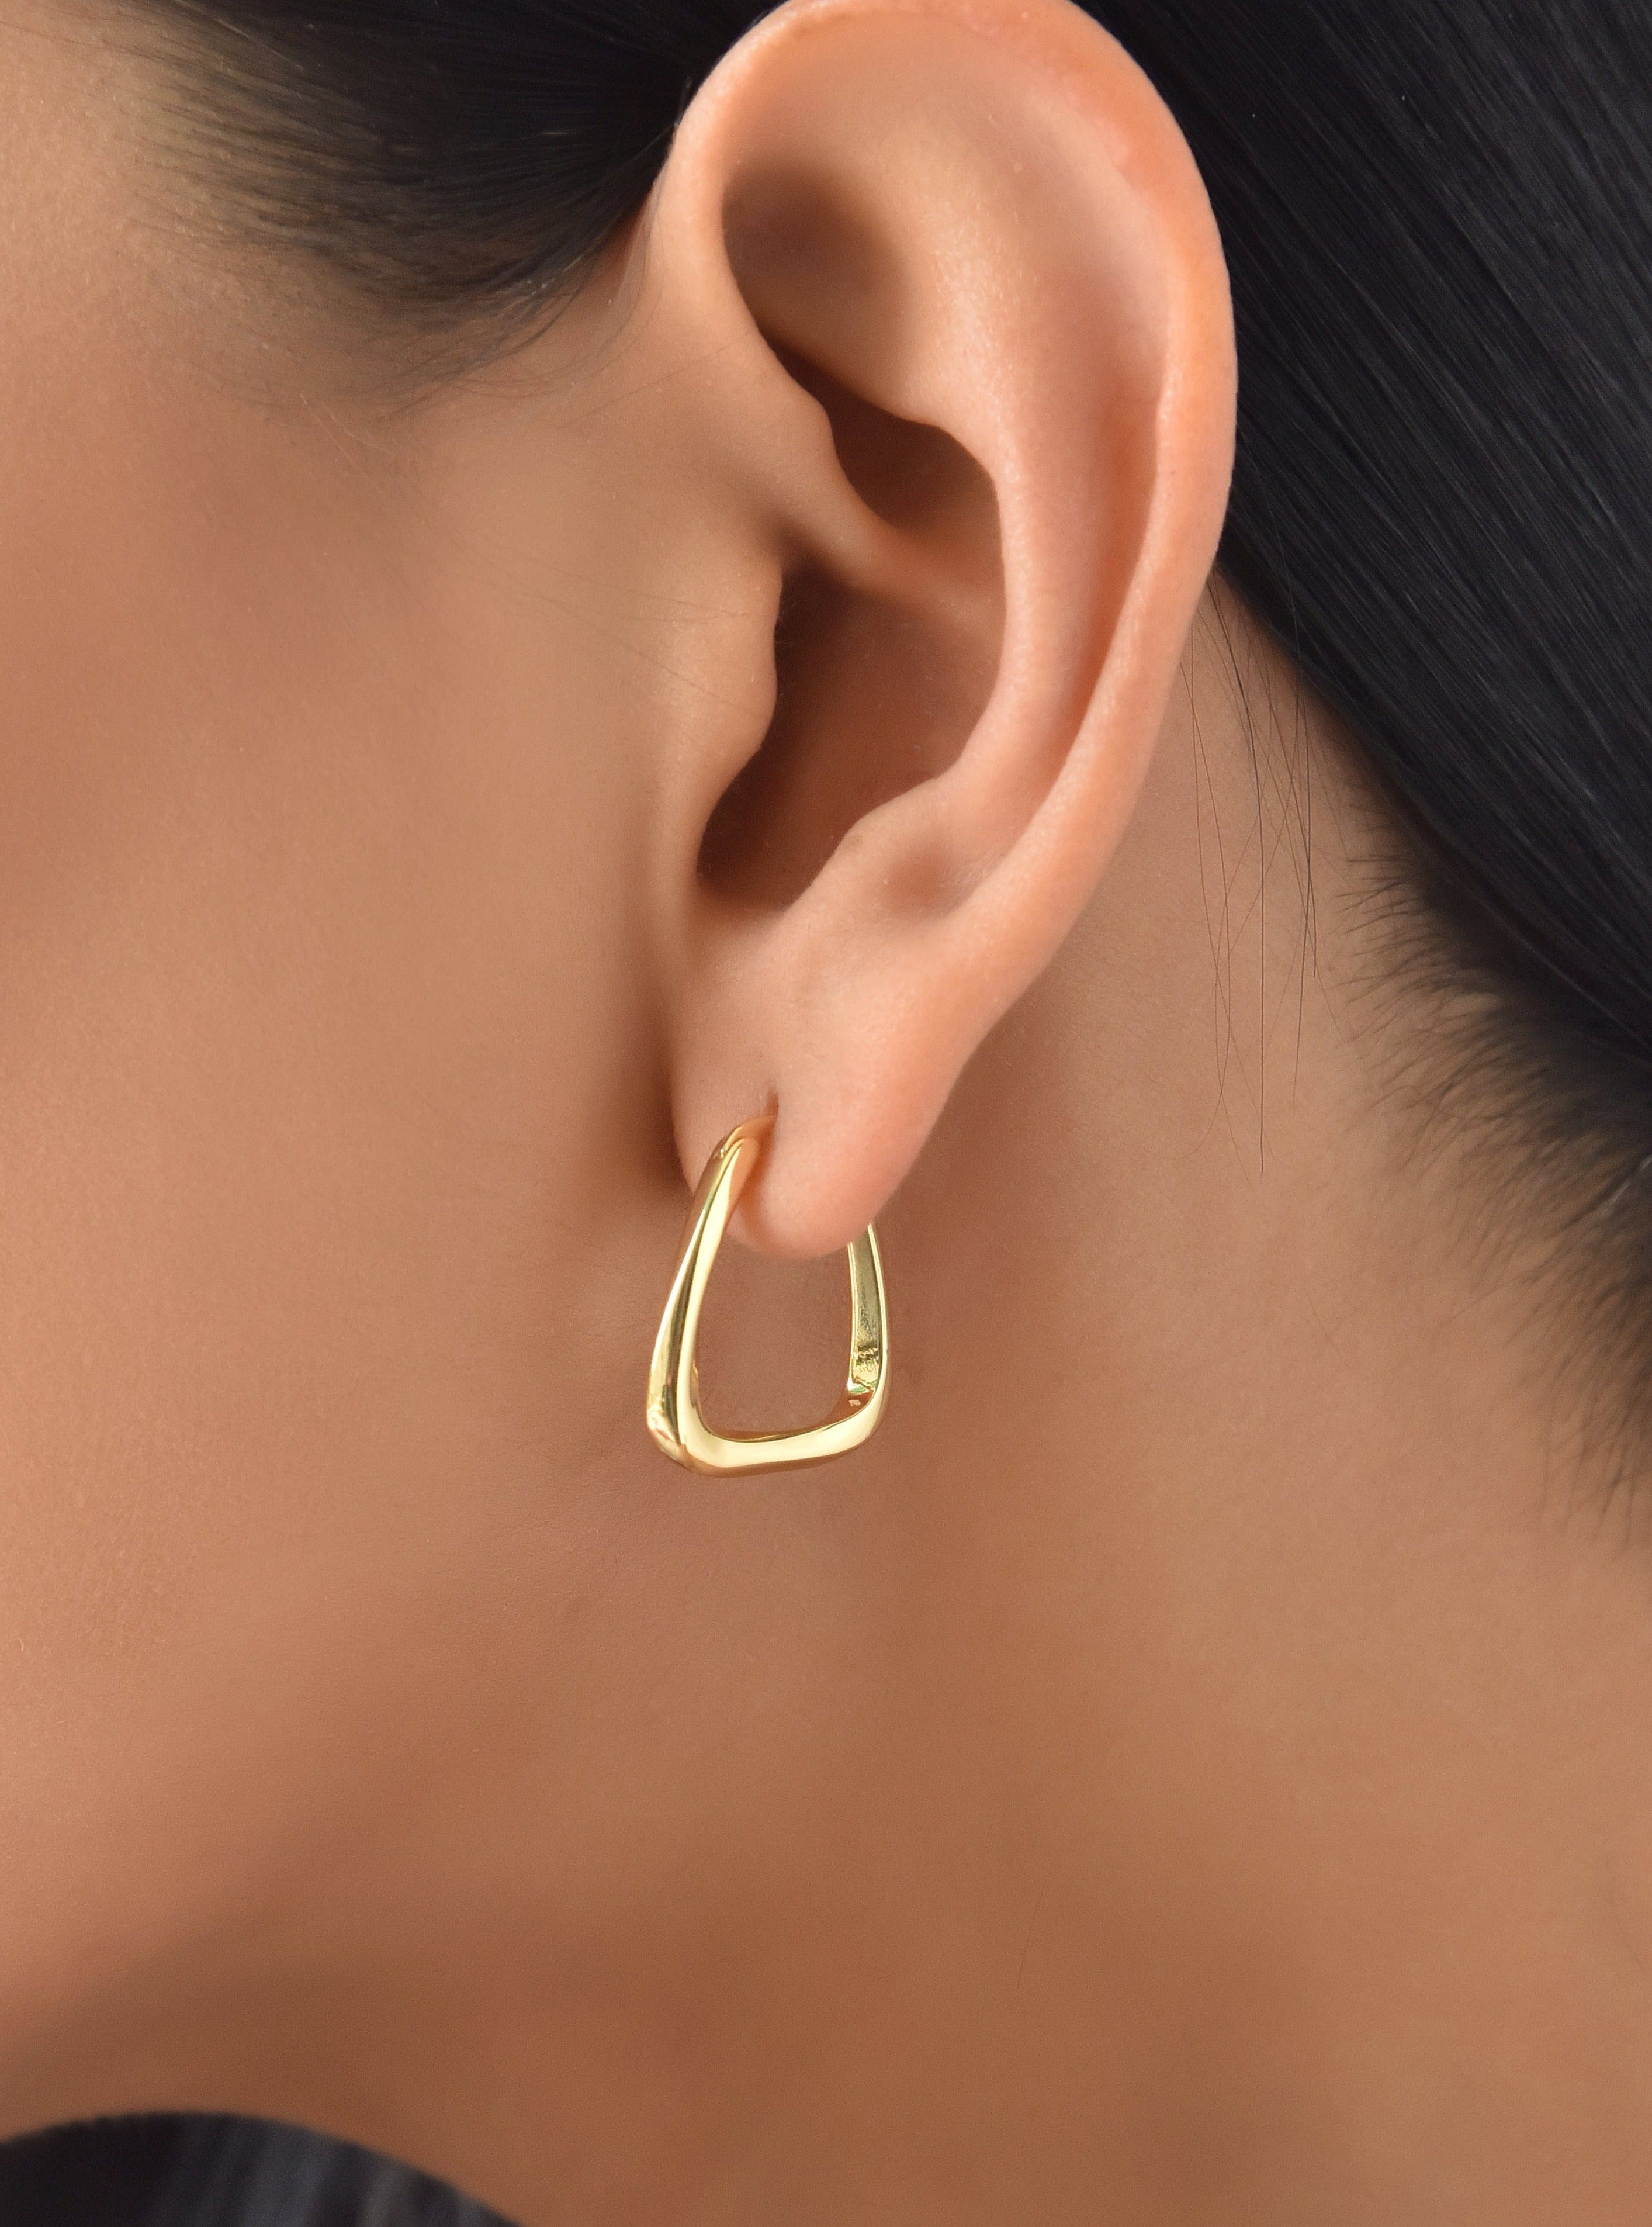 Klissaa earrings Impromptu Plans Triangular Hoops